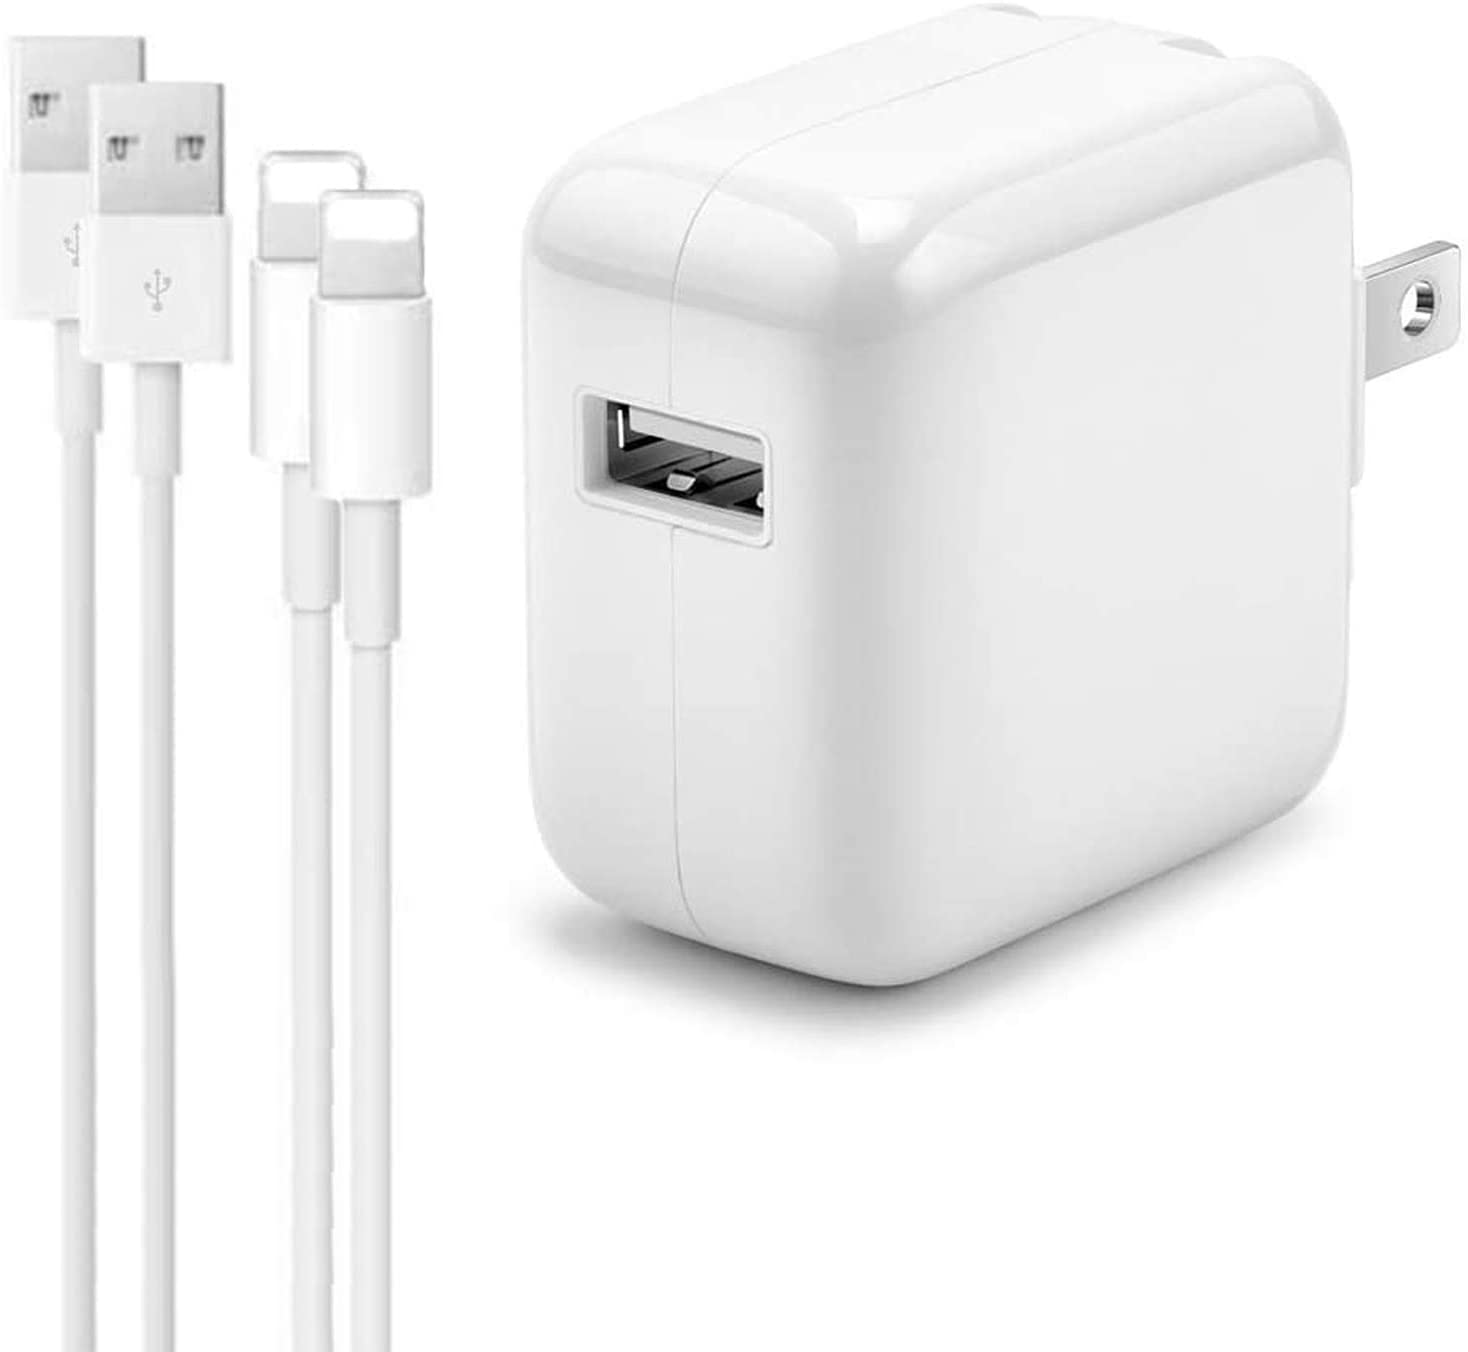 Apple 12W USB Charger for iPad iPlace Kenya